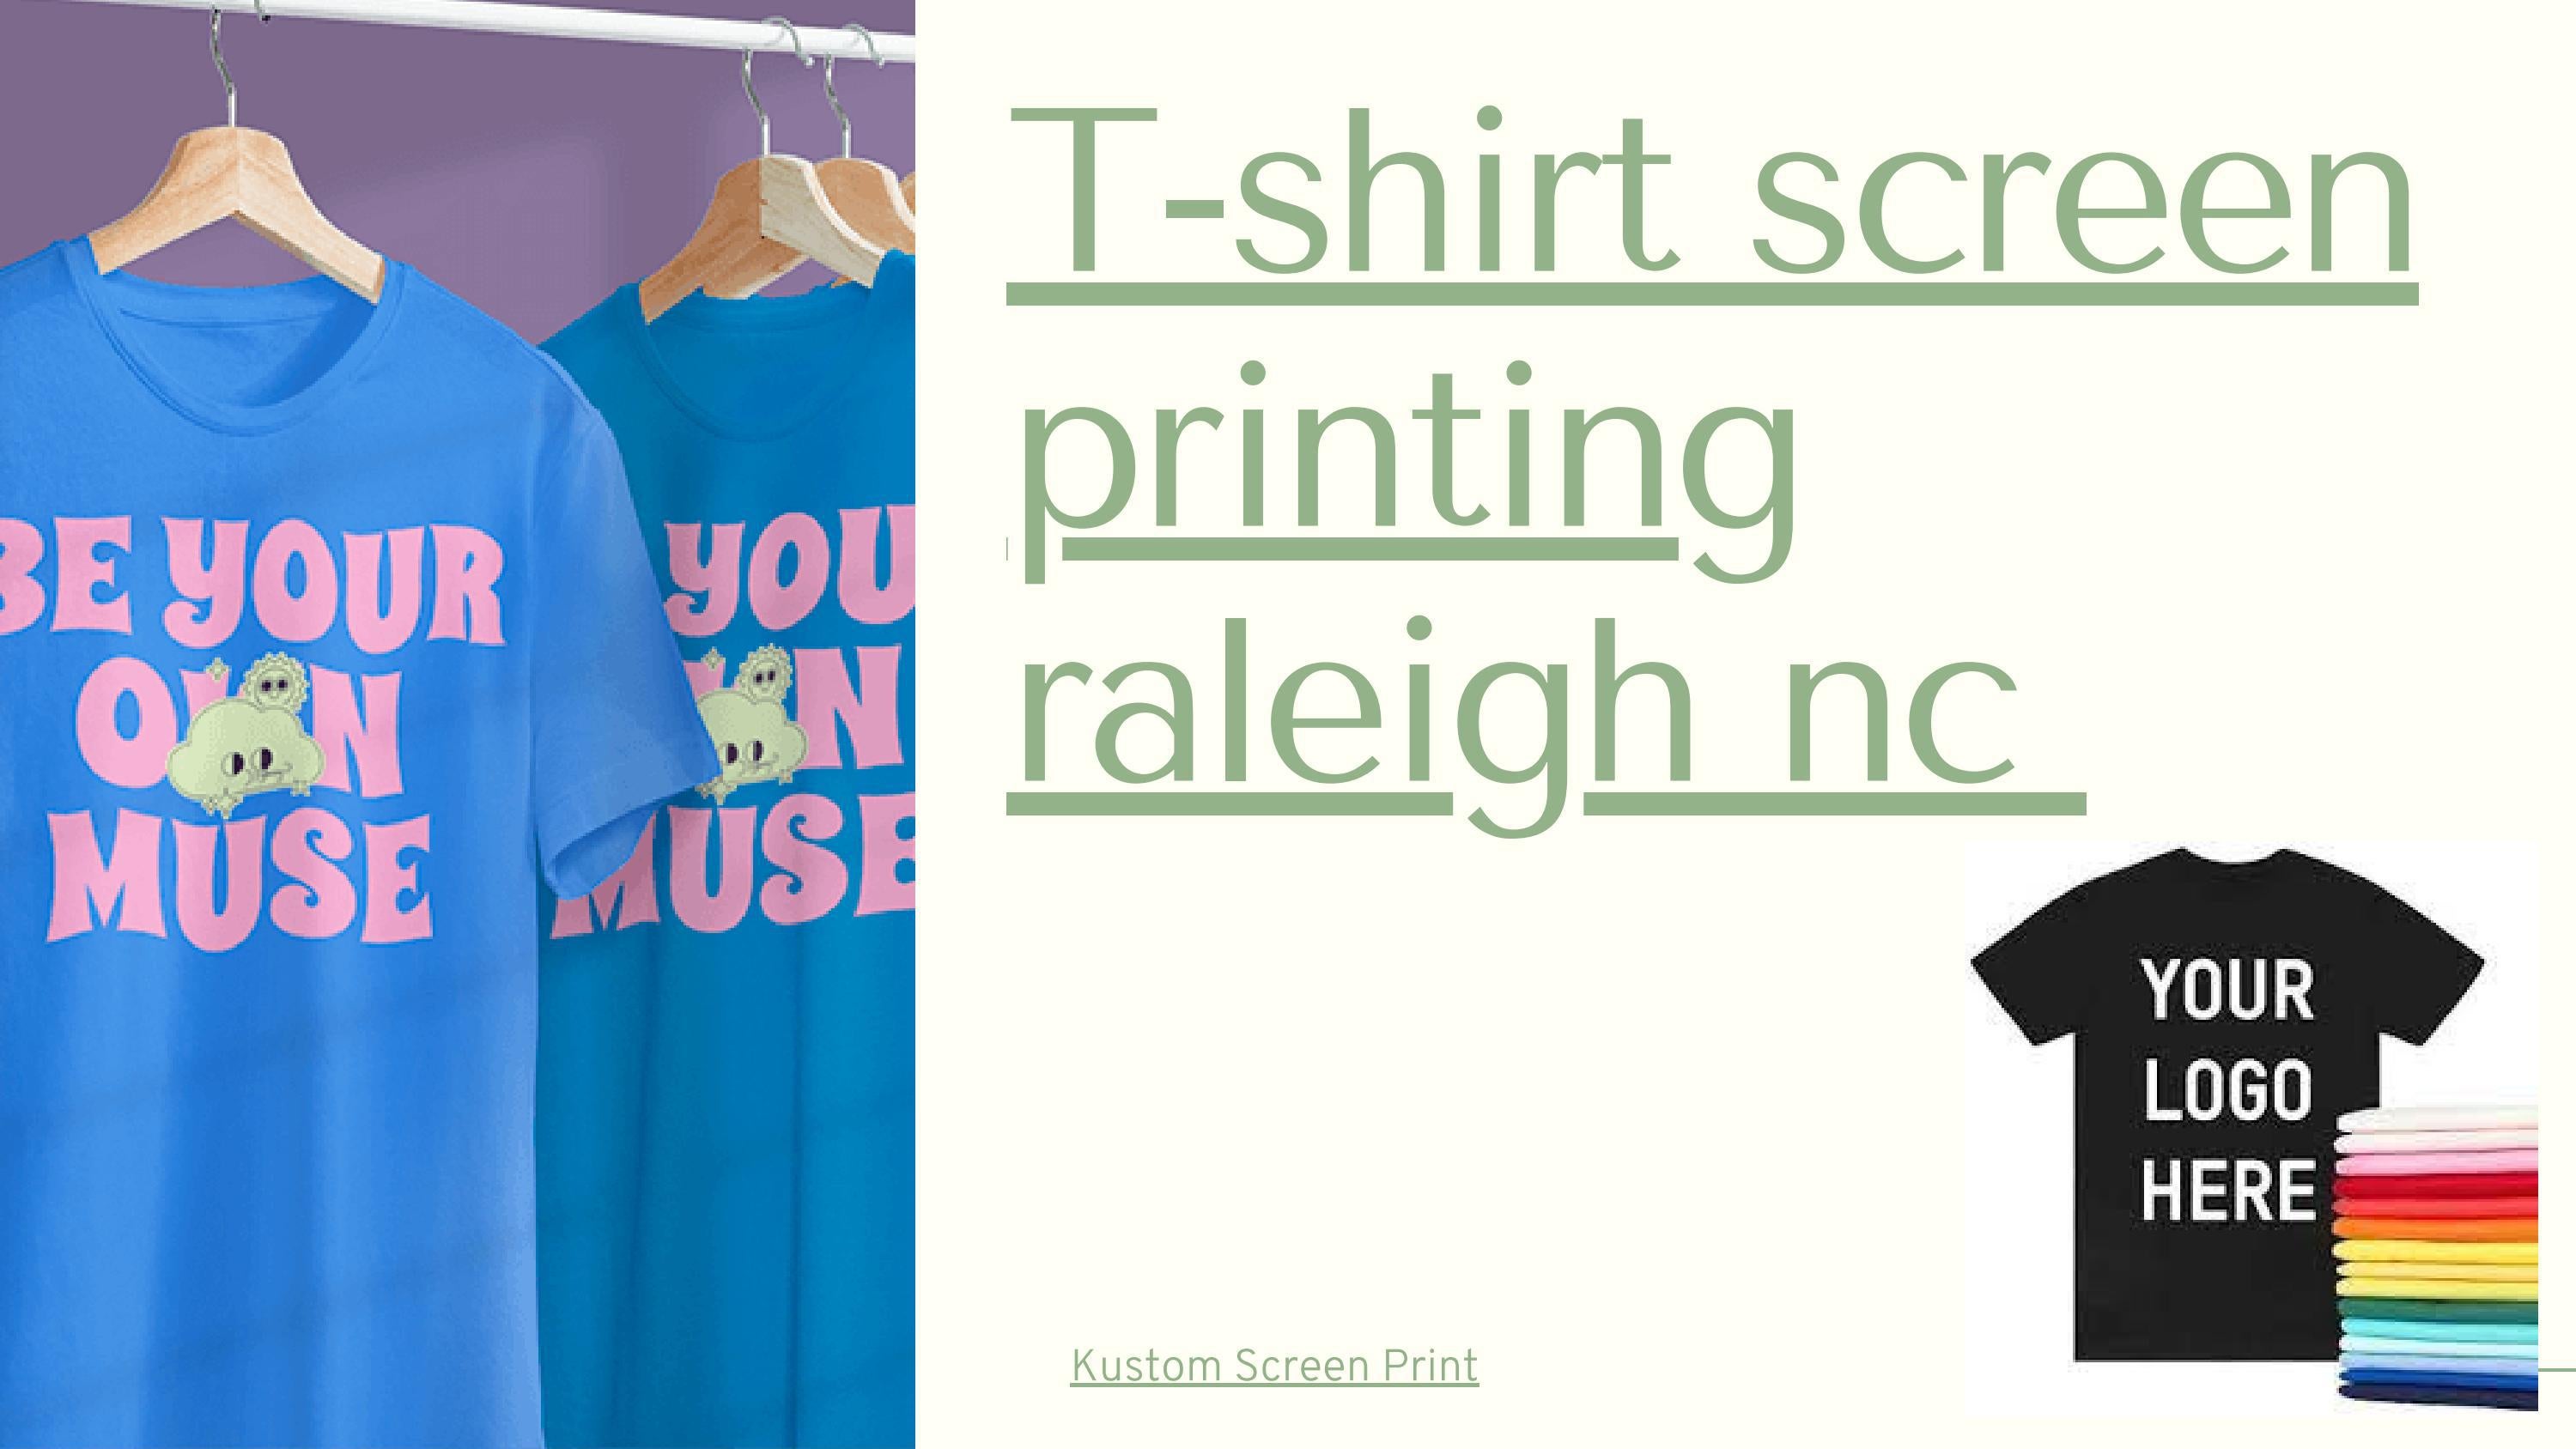 T-shirt screen printing raleigh nc | Kustomscreen Print